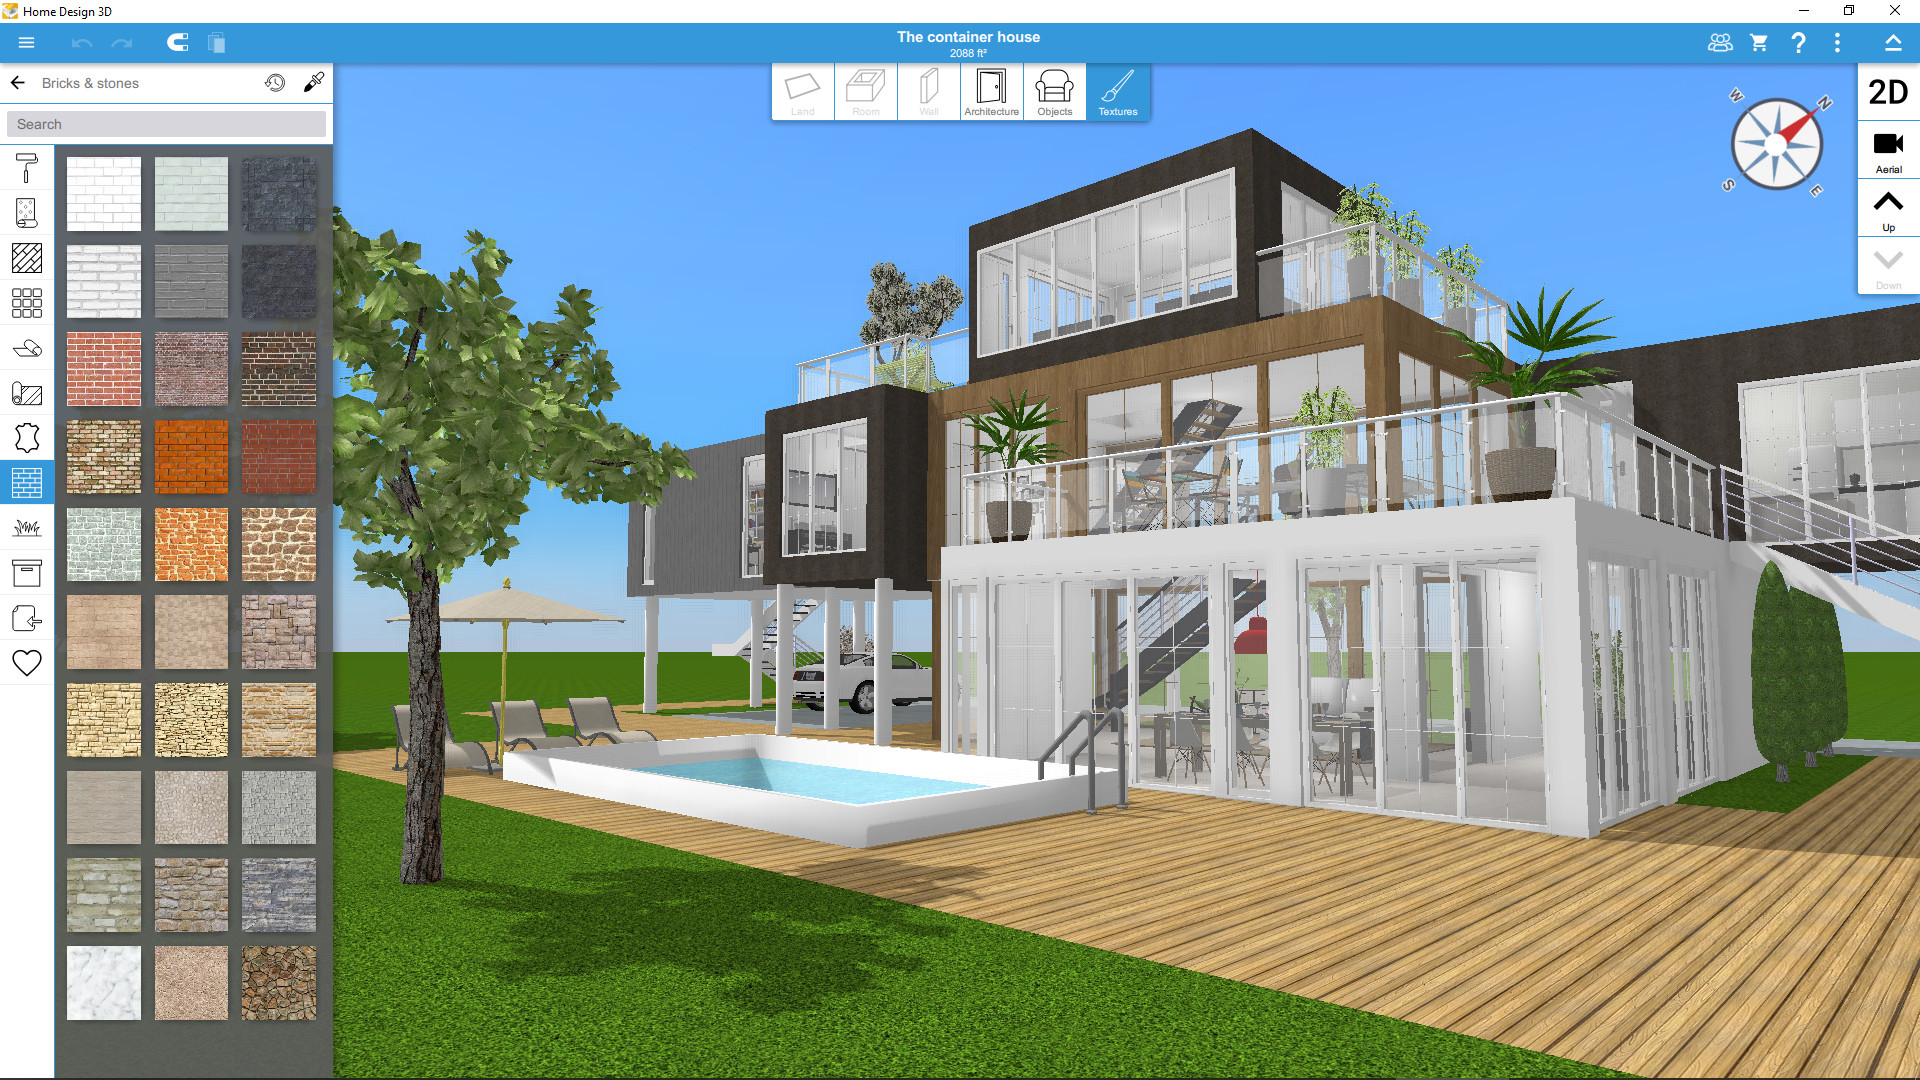 .Home Design 3D Microsoft : Home Design 3D - FREEMIUM - Apps on Google